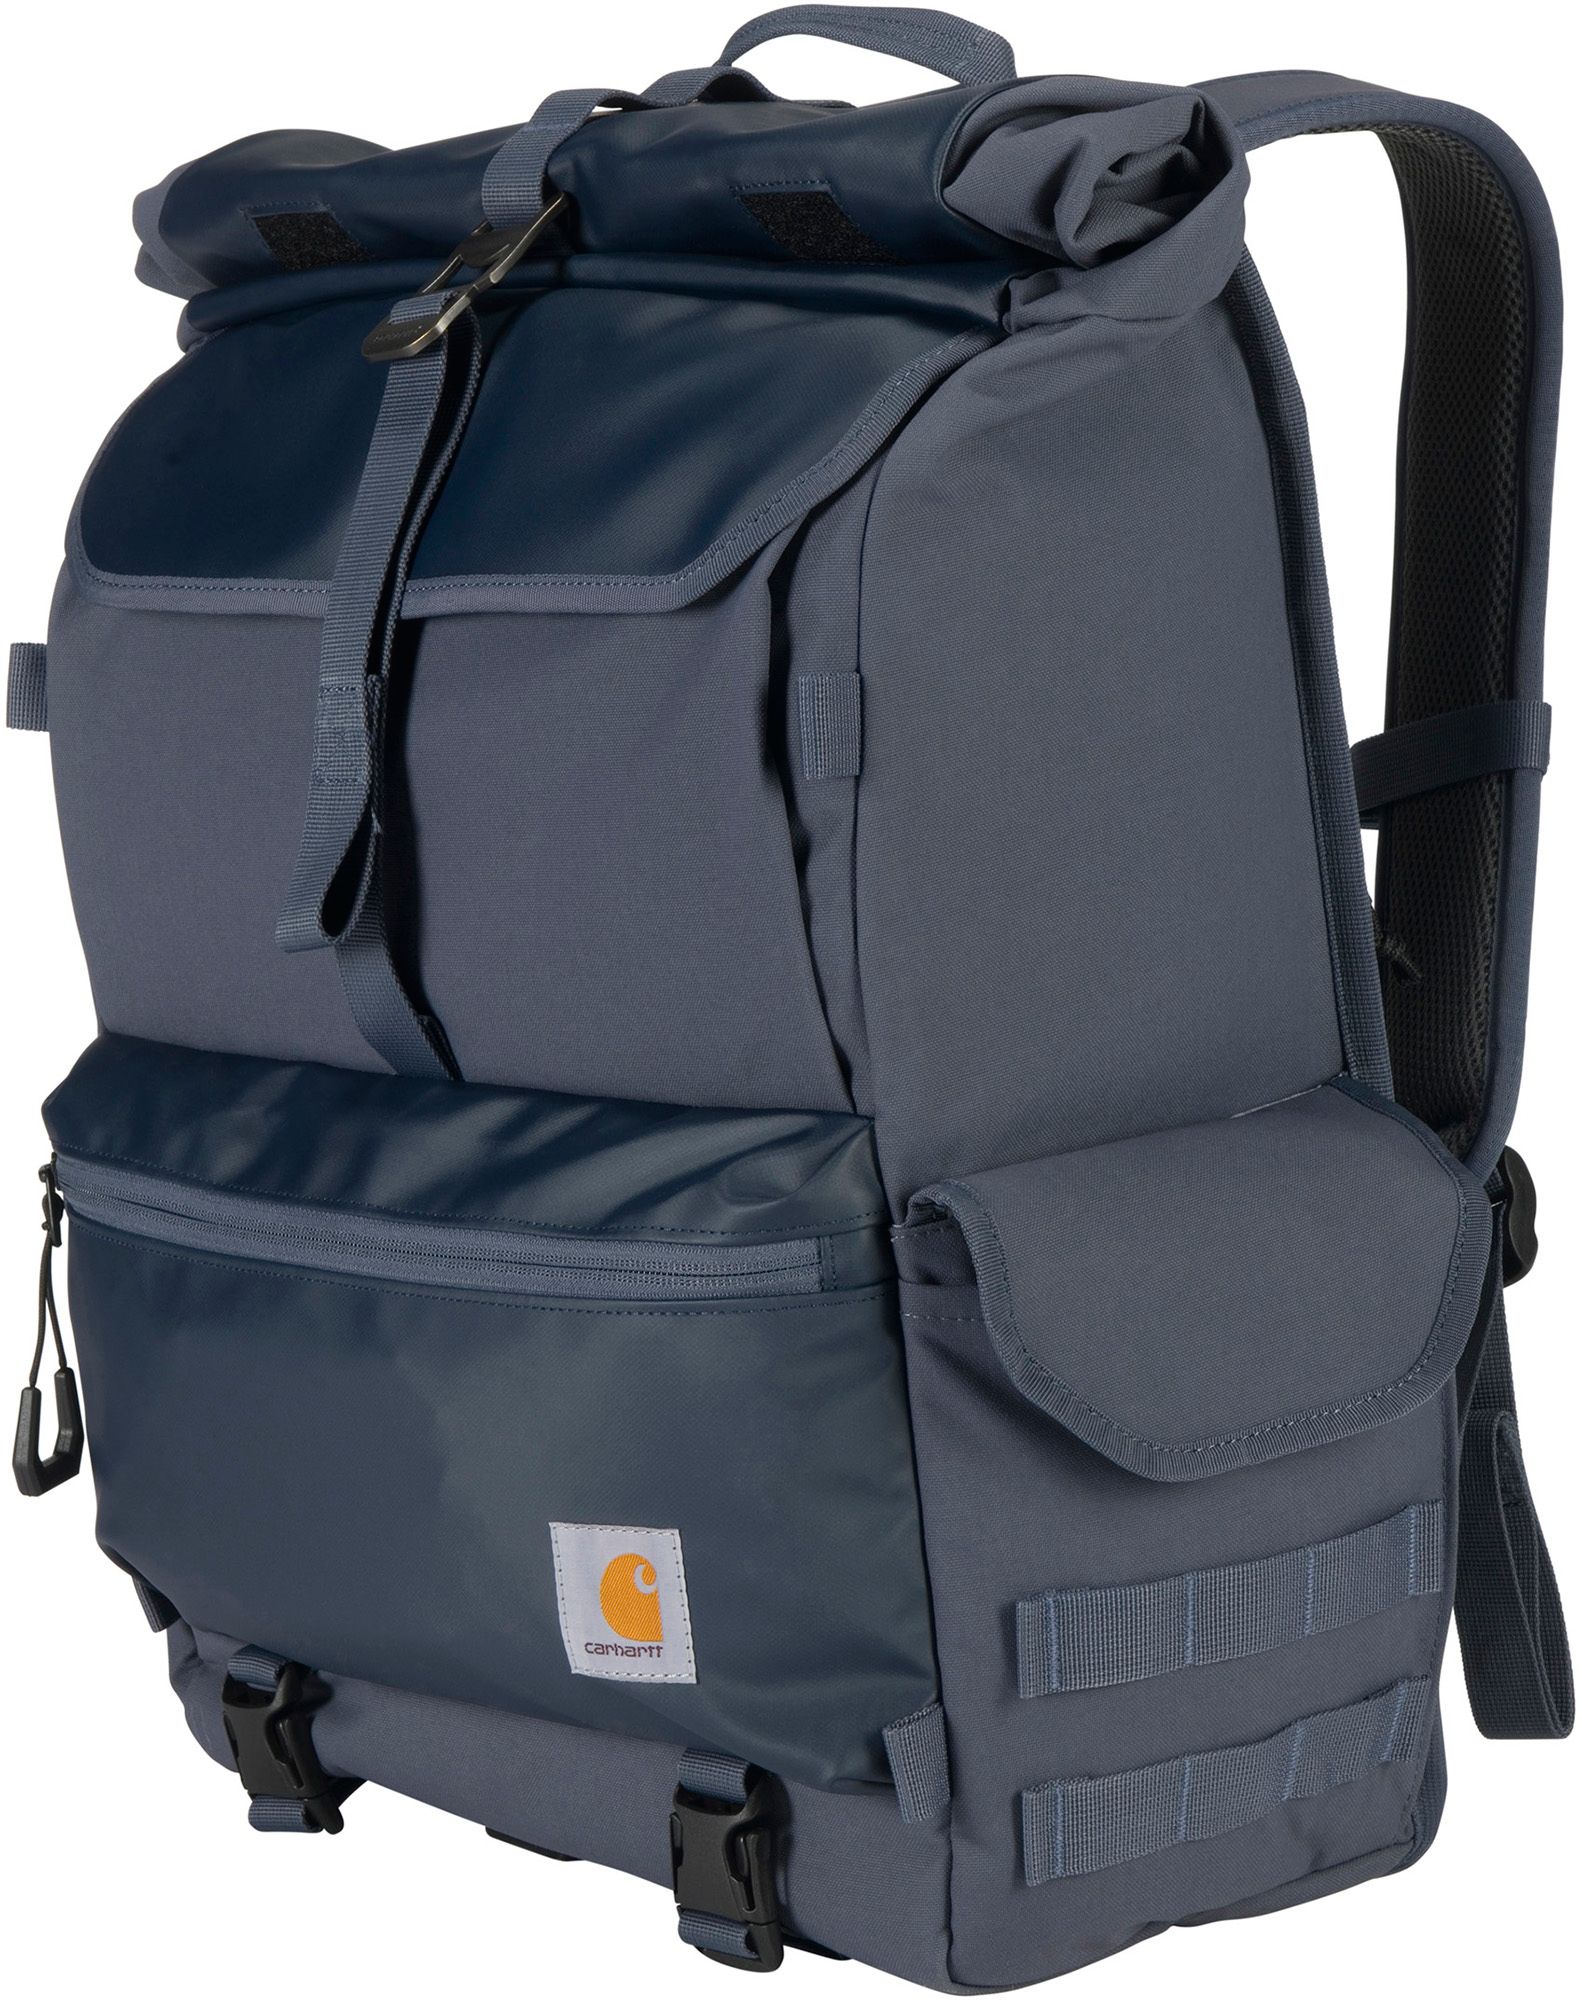 Carhartt 40L Nylon Roll-Top Backpack